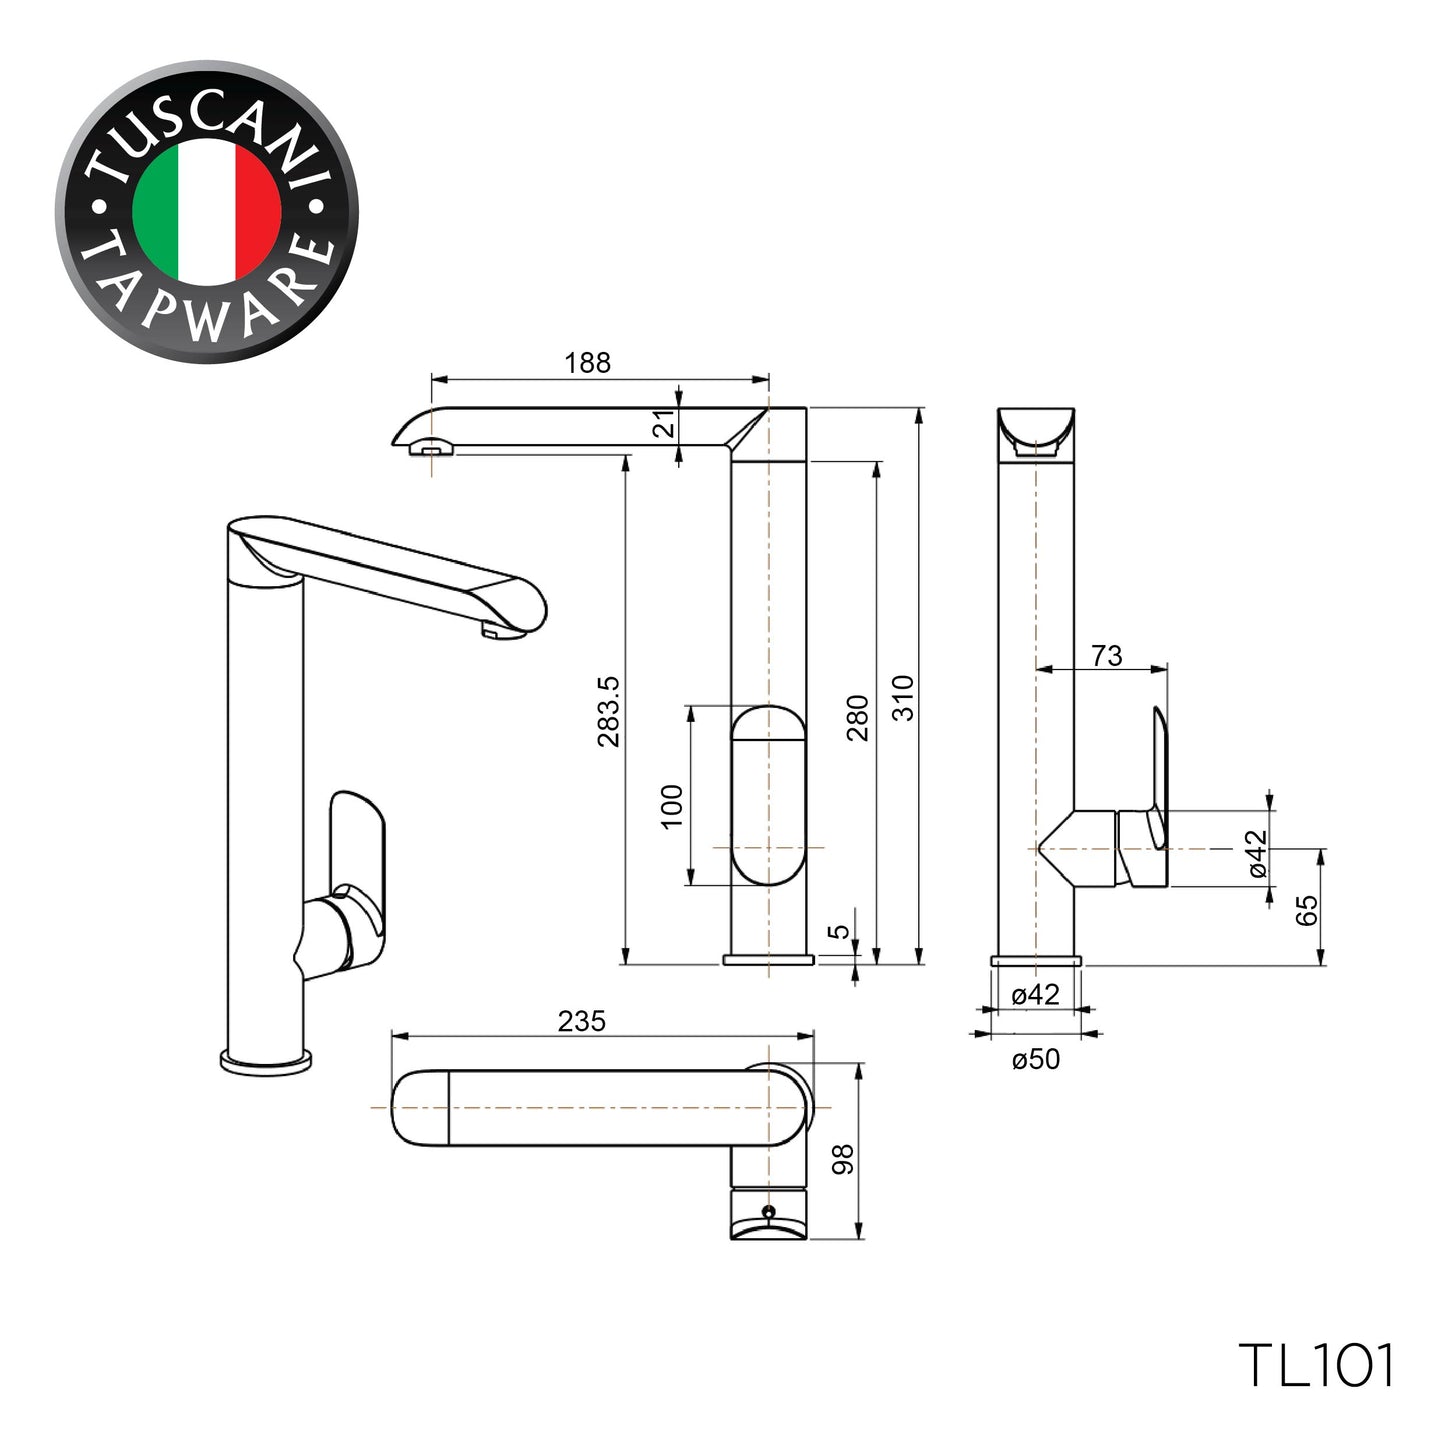 TL101 - Lavanzi Series Kitchen Mixer